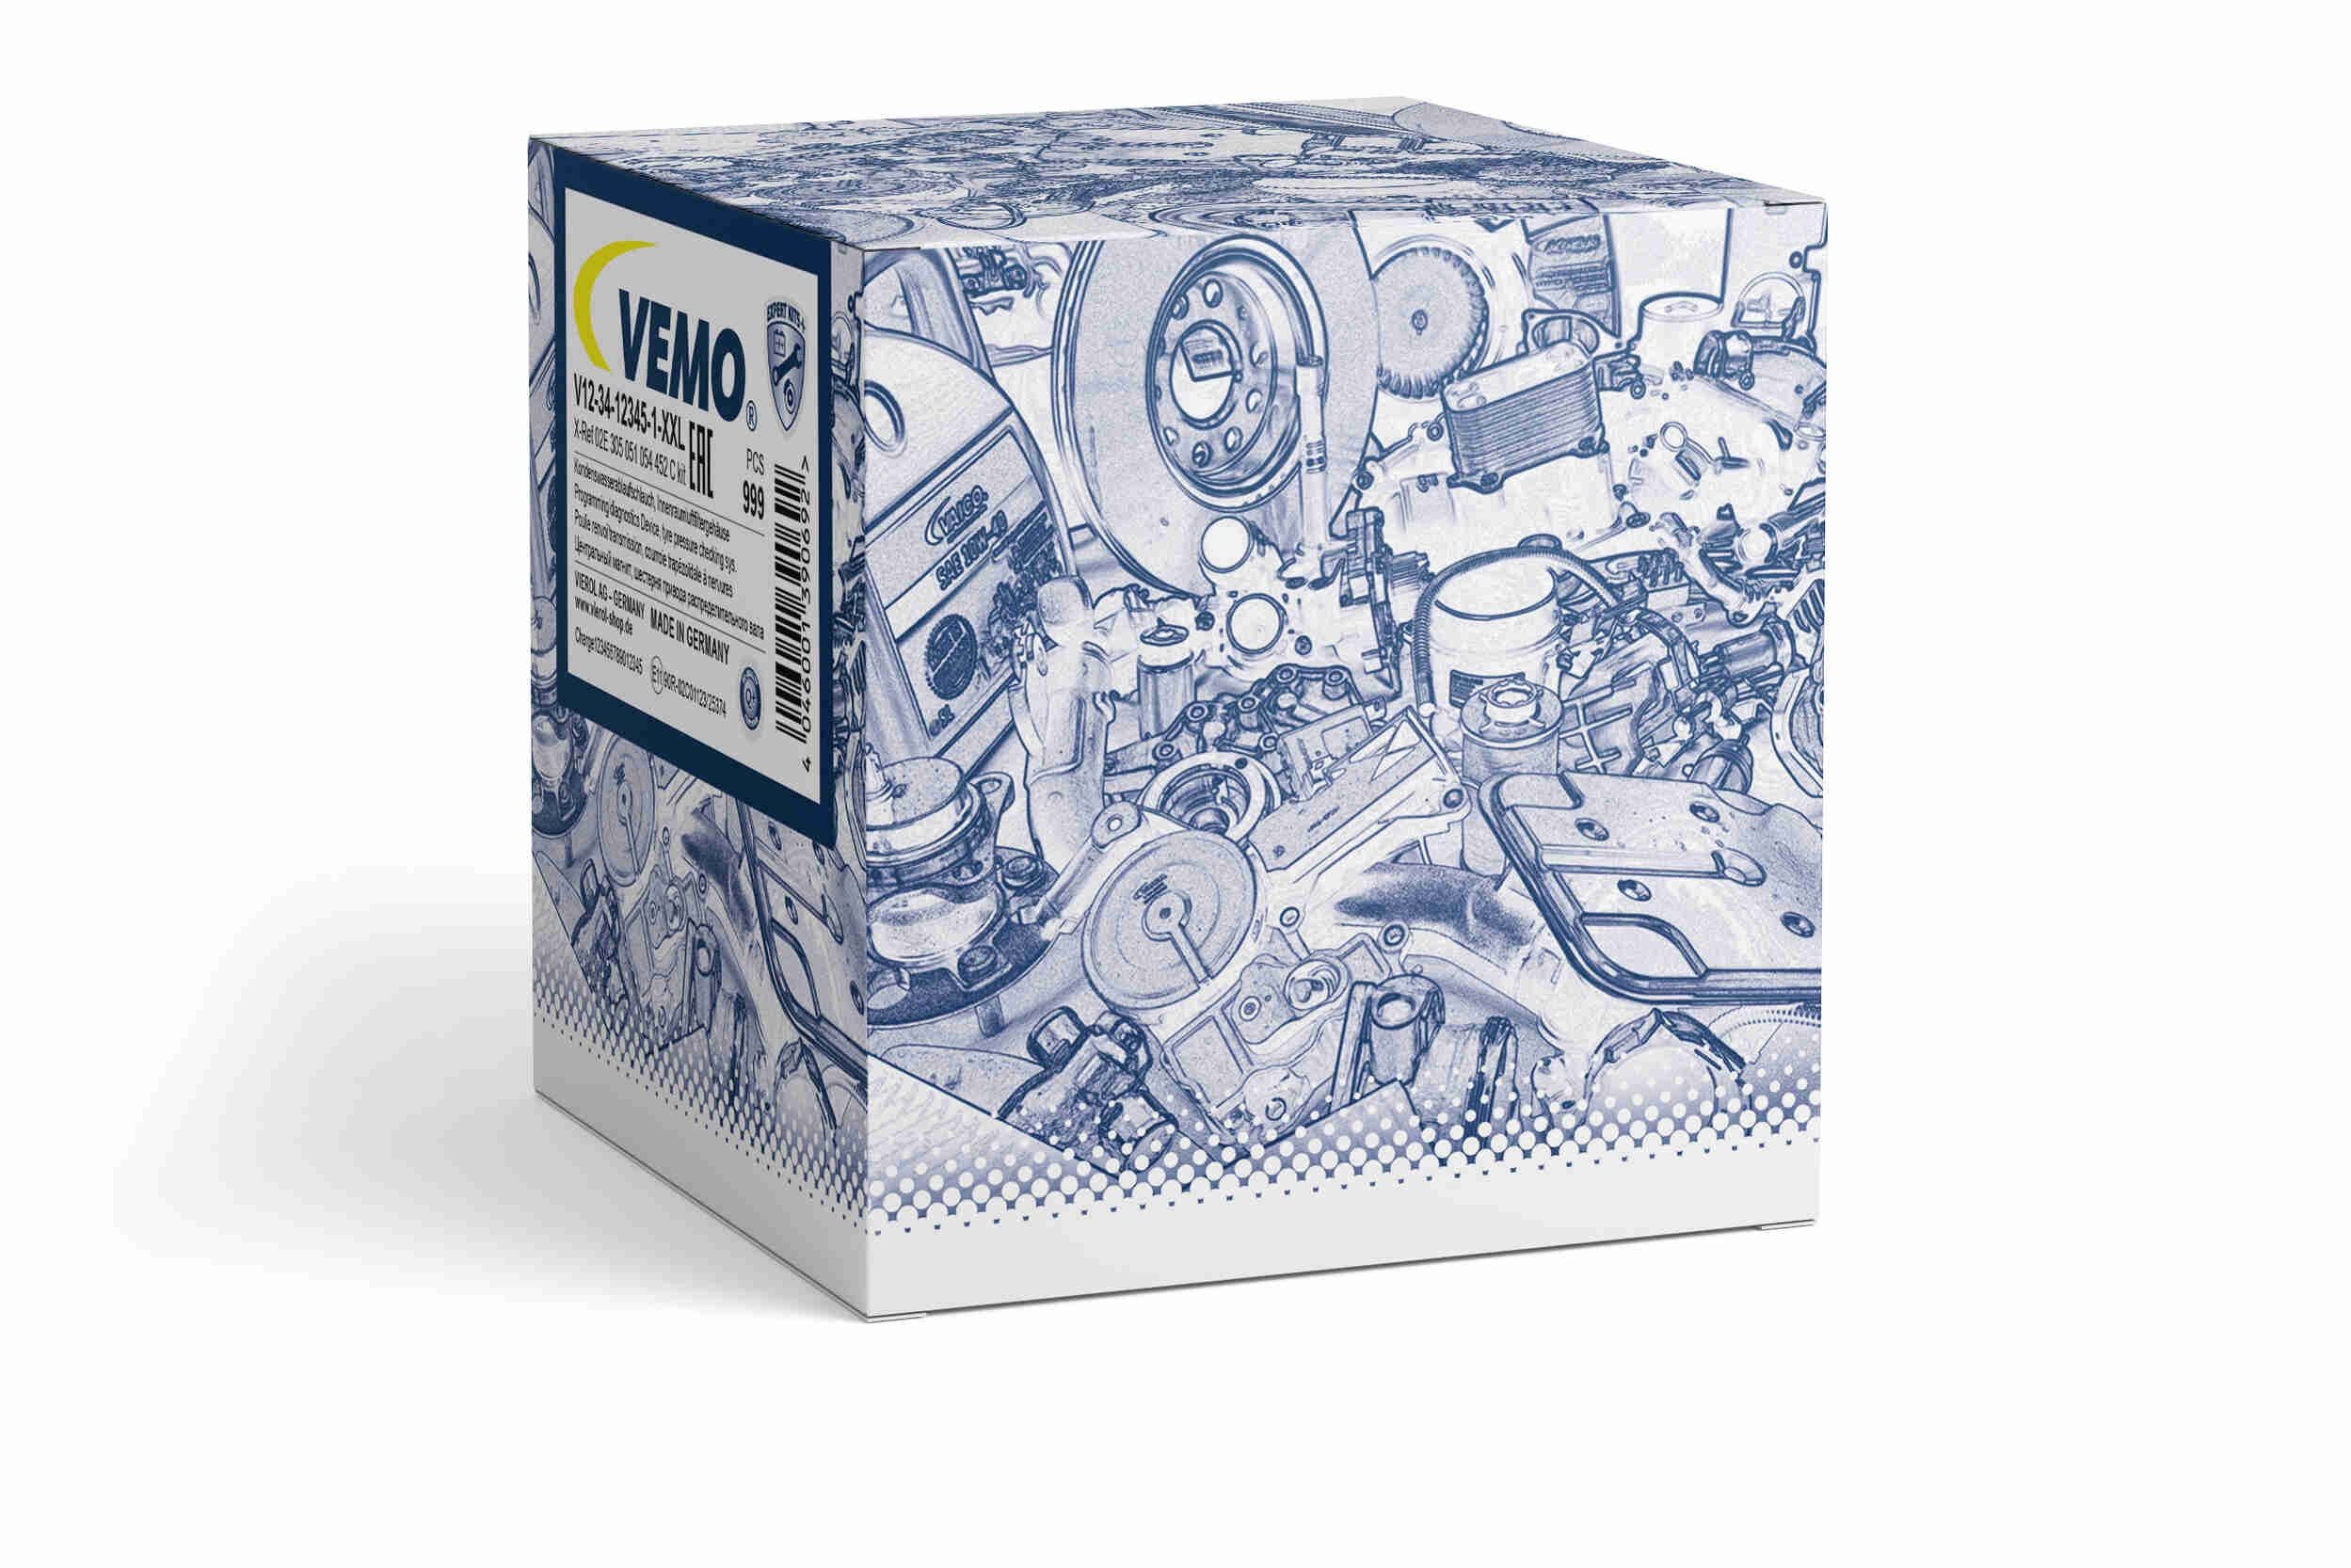 VEMO V25-72-0180 Fuel rail pressure sensor Q+, original equipment manufacturer quality